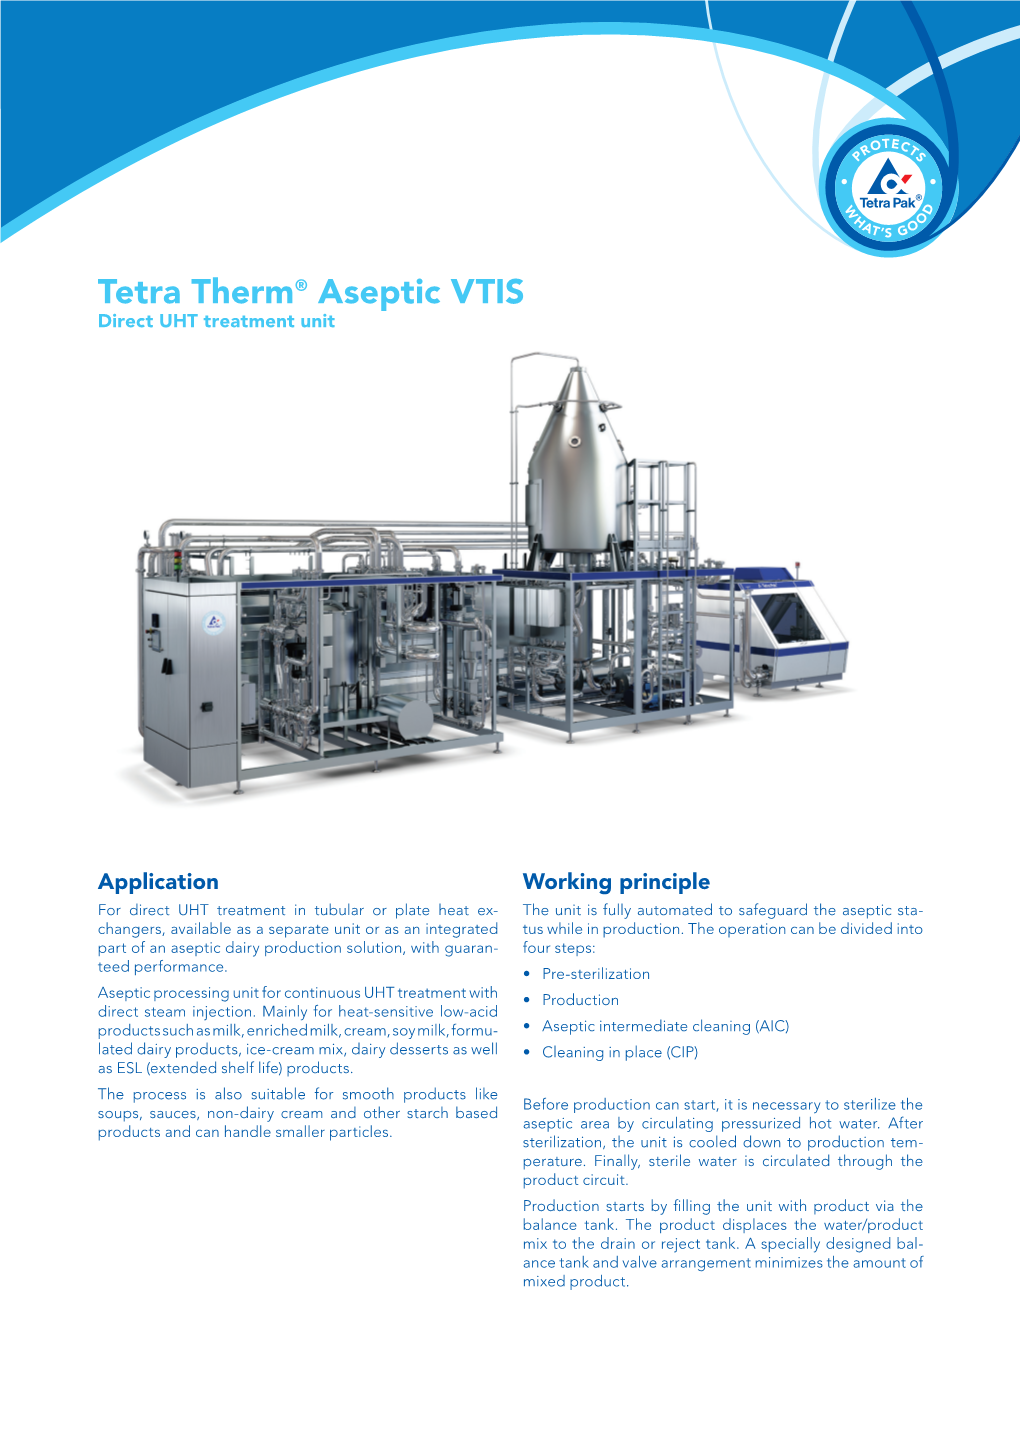 Tetra Therm® Aseptic VTIS Direct UHT Treatment Unit